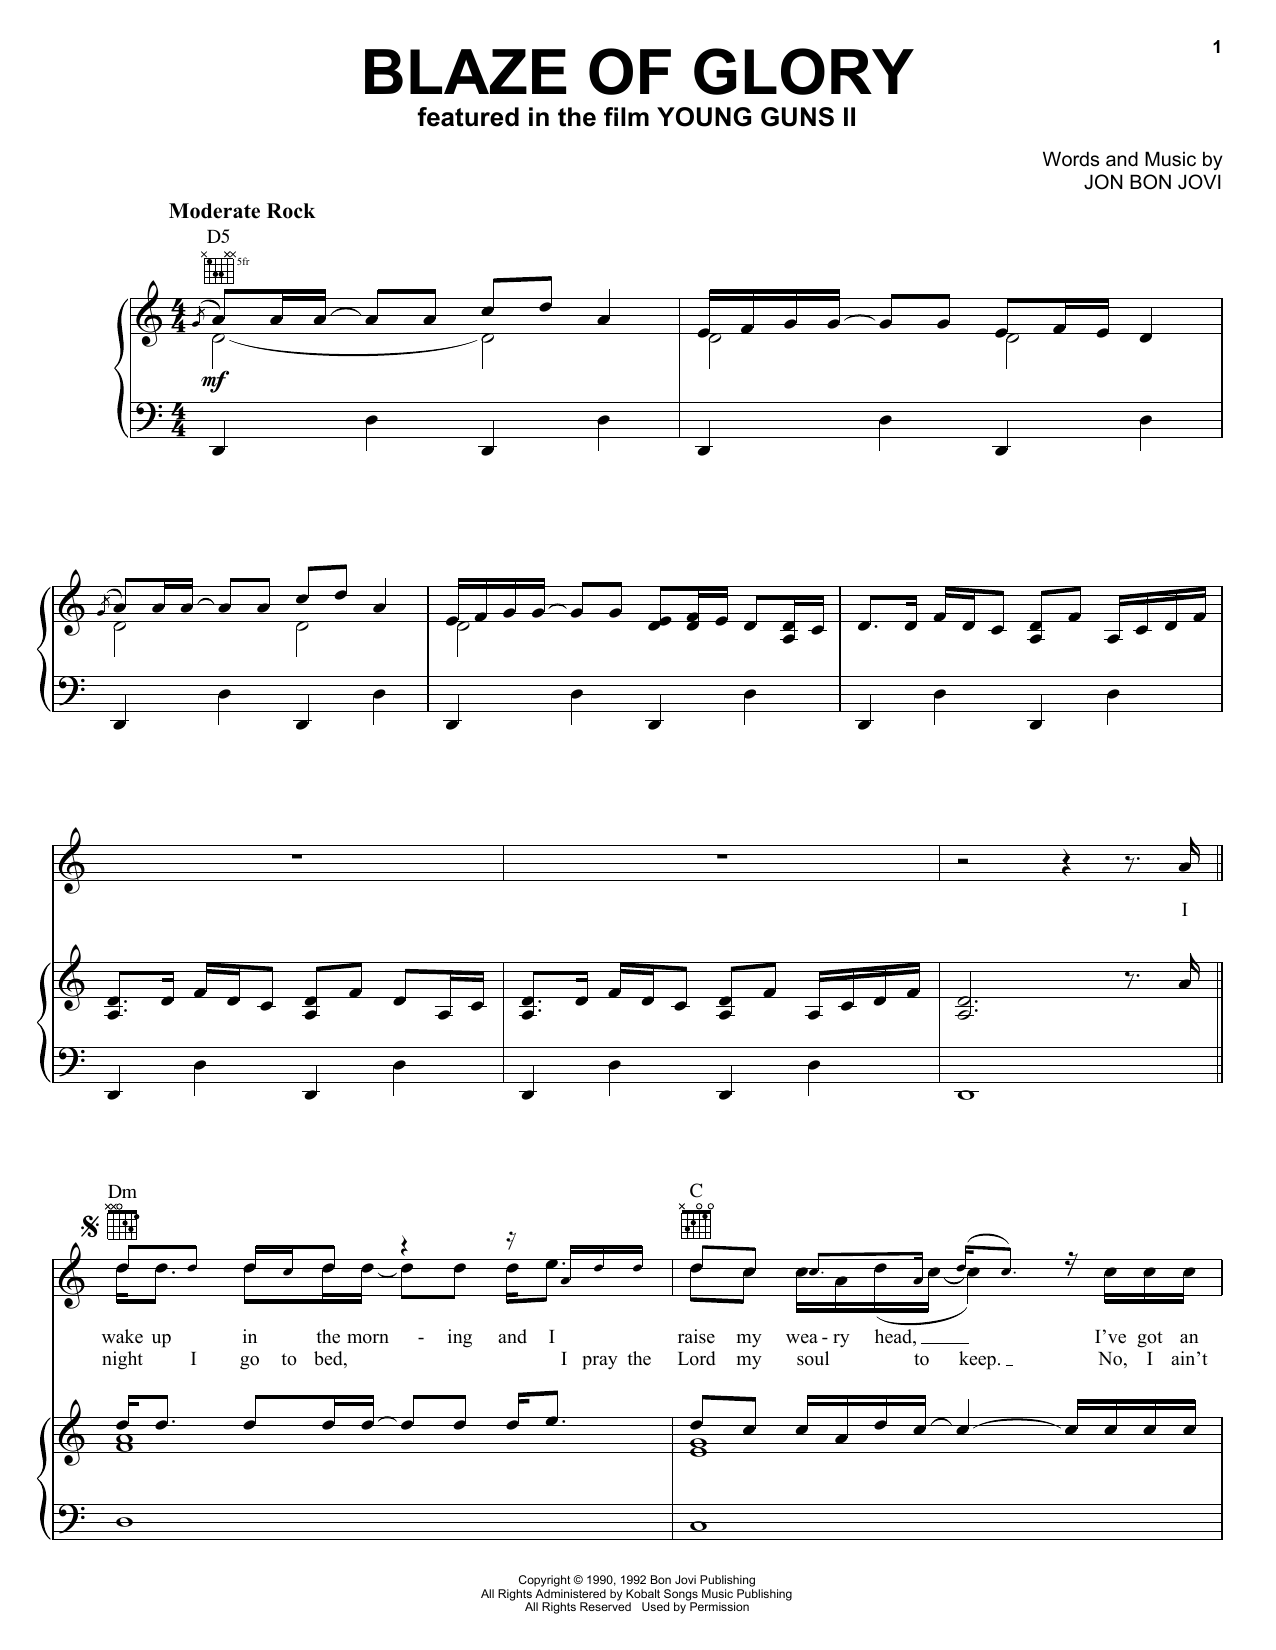 Download Jon Bon Jovi Blaze Of Glory Sheet Music and learn how to play Guitar Tab PDF digital score in minutes